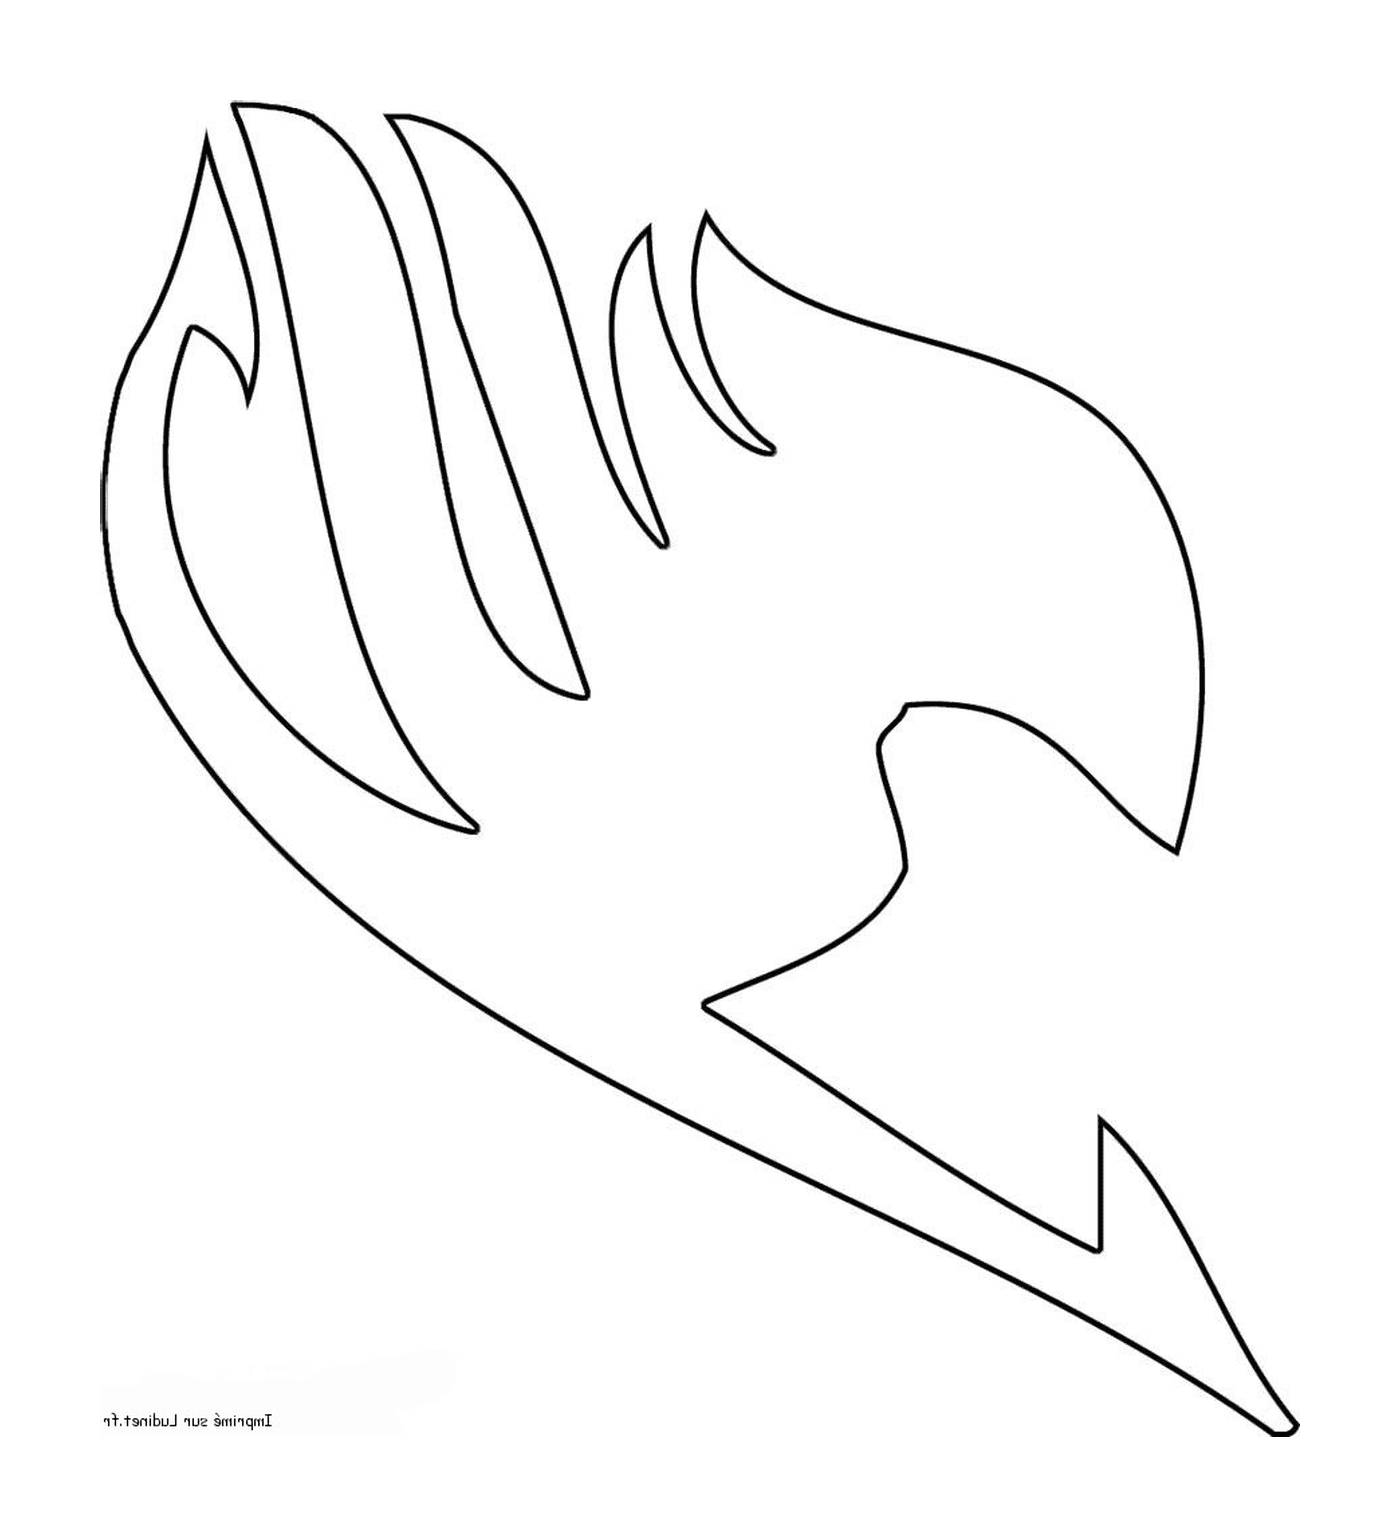  Das Logo der Fee Tail 